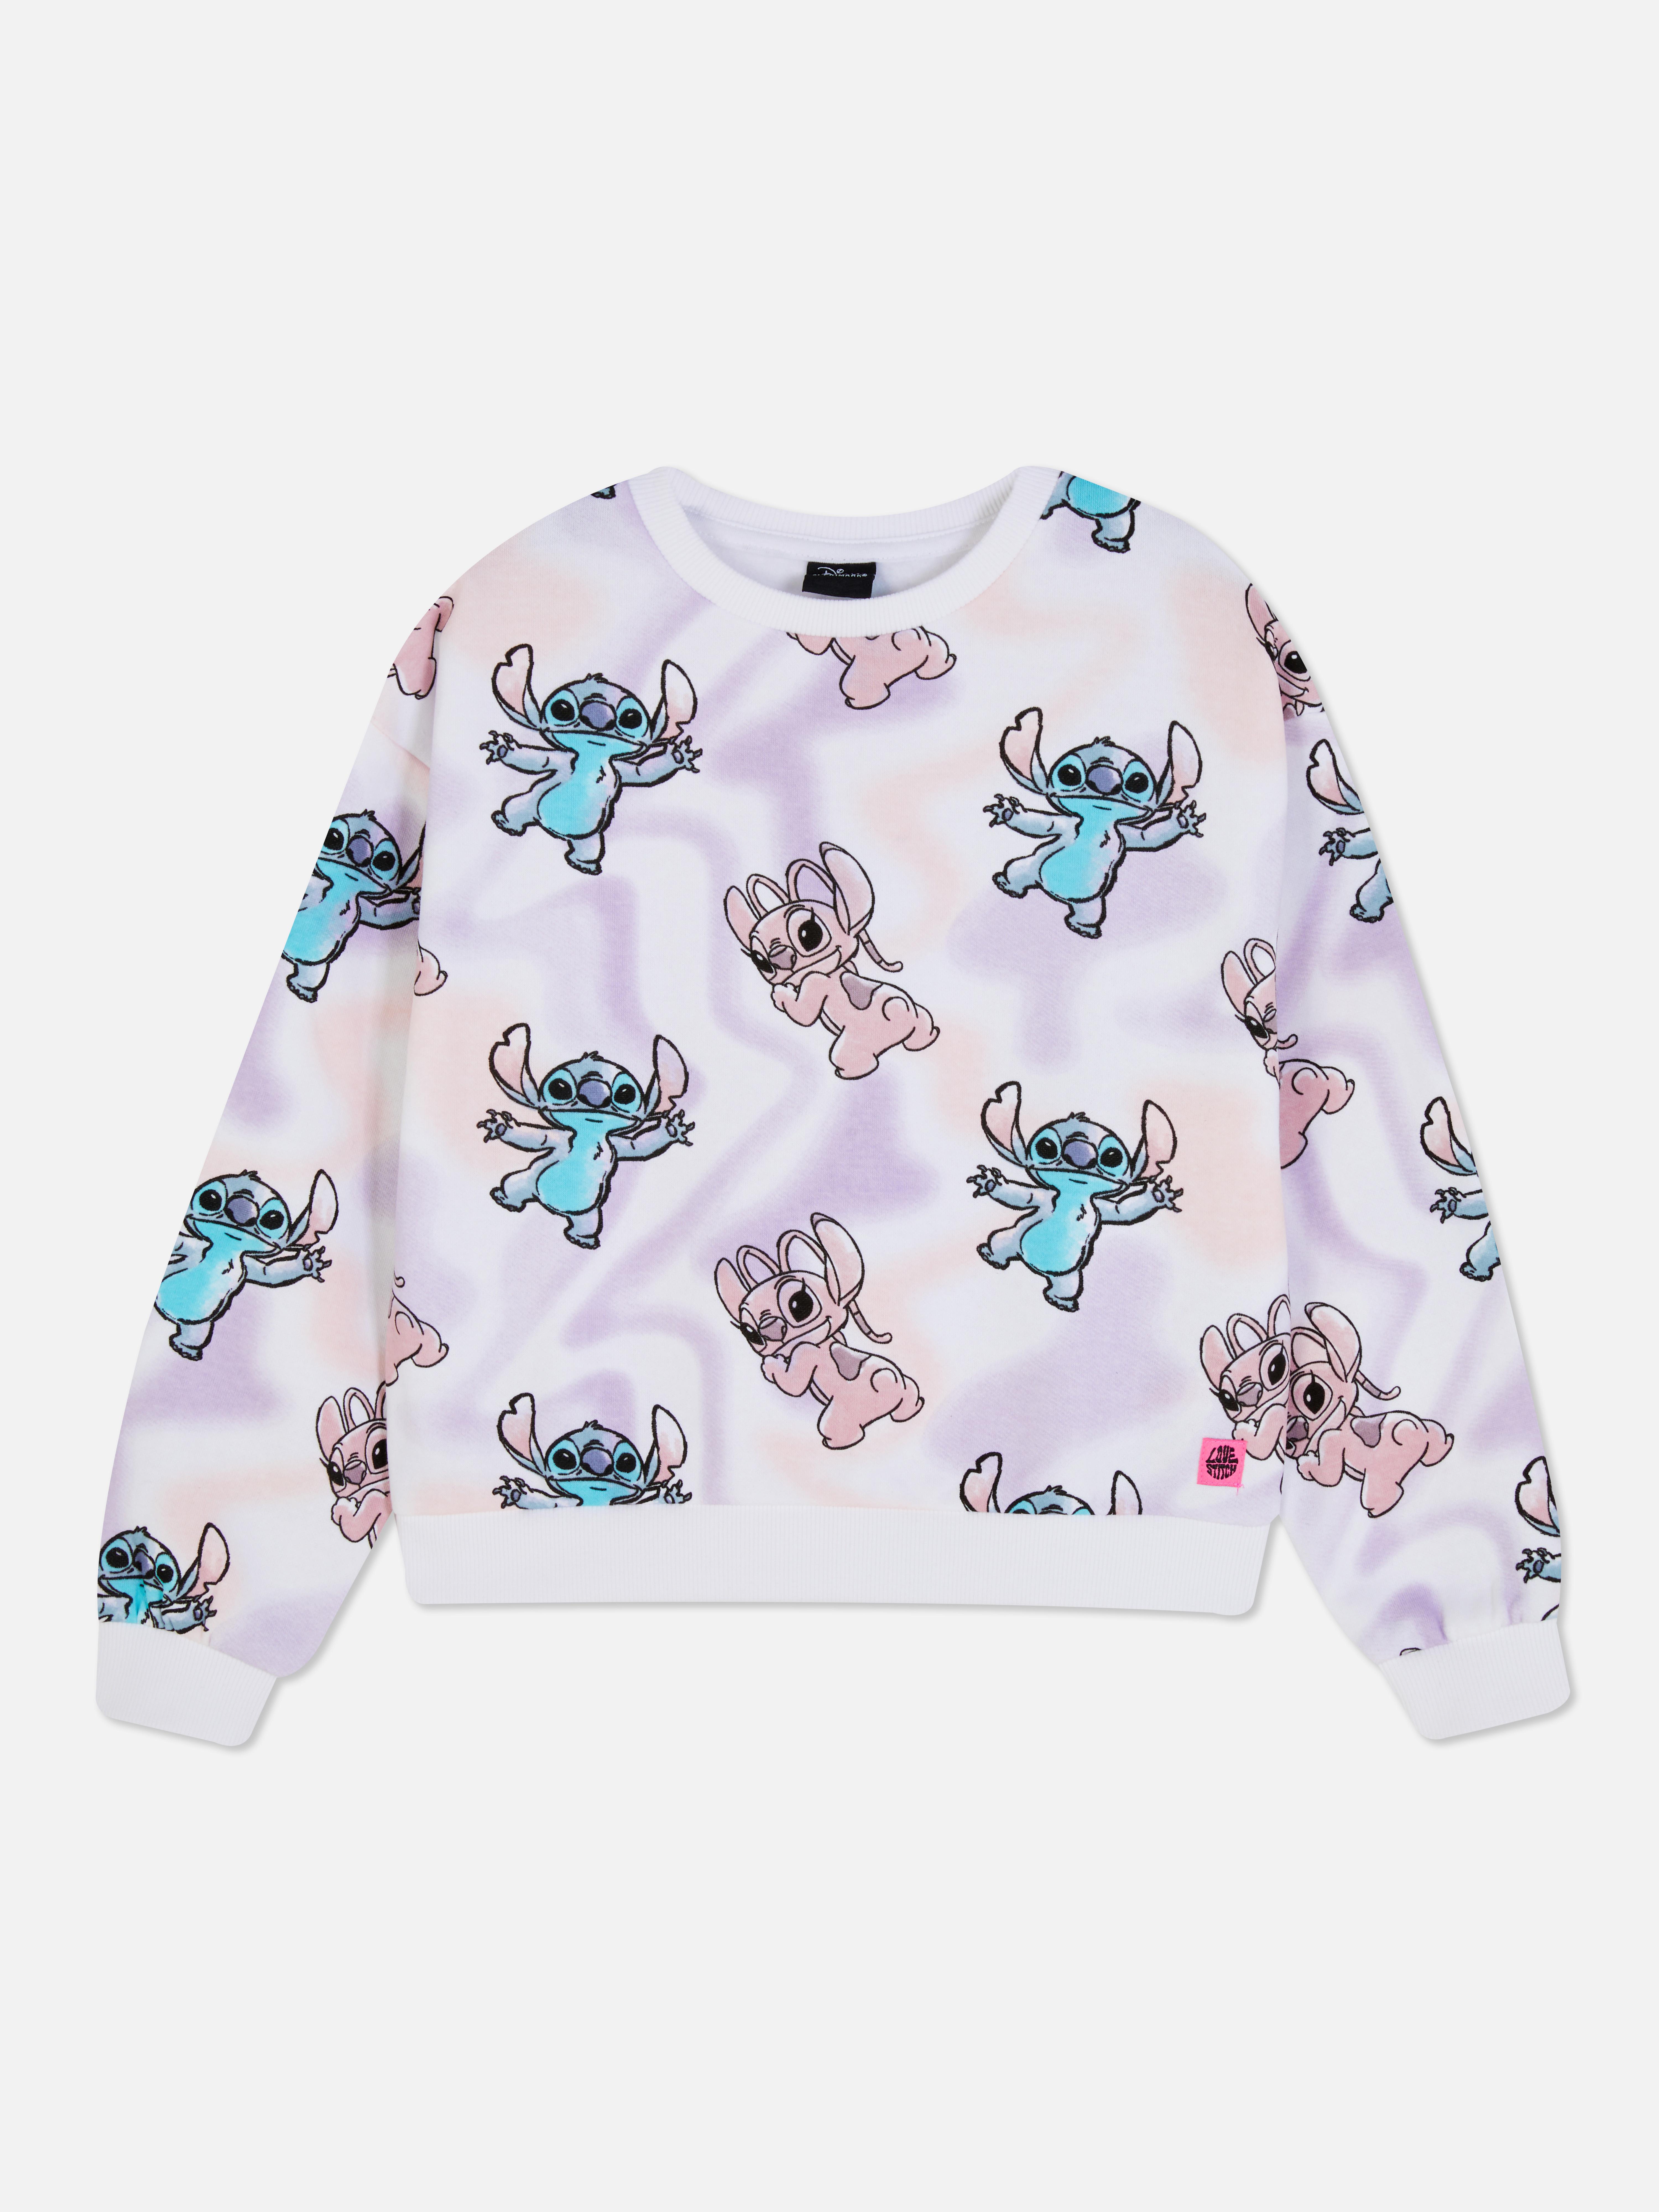 Disney's Lilo & Stitch Printed Sweatshirt